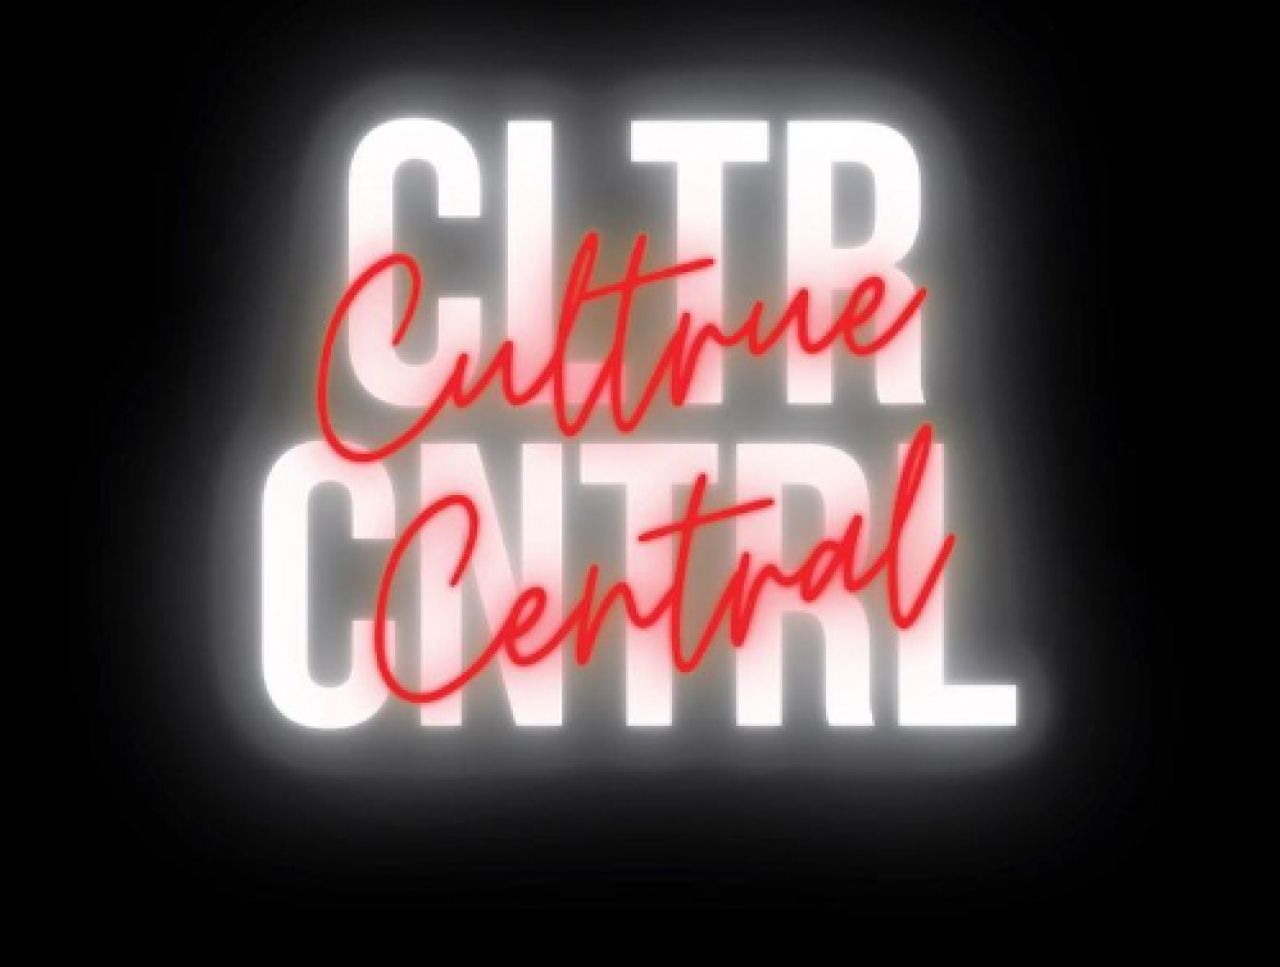 Culture Central graphic